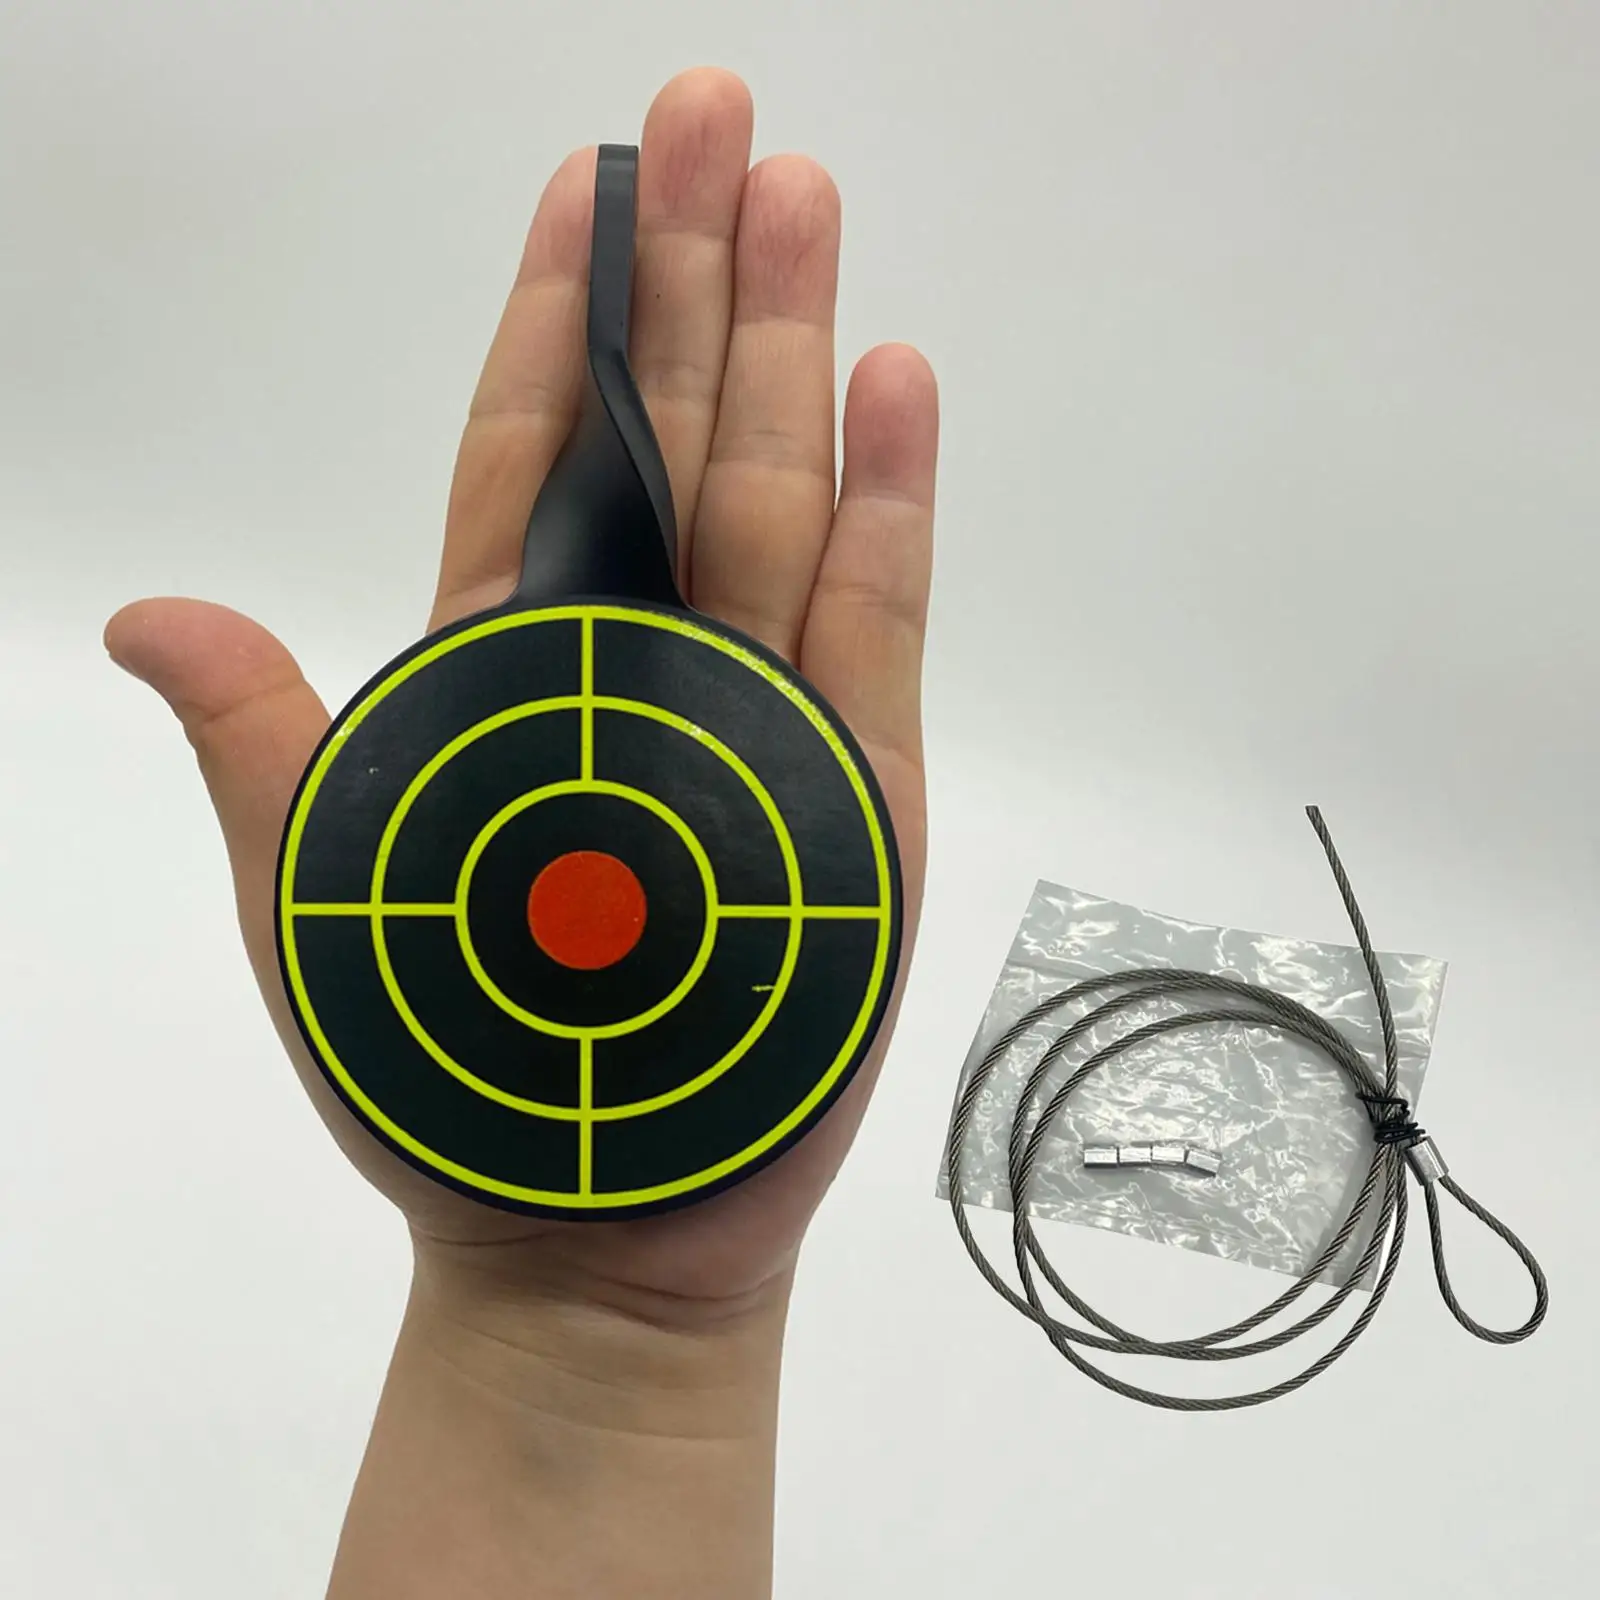 Spinner   Resetting Targets Dia. 8cm Shooting Training